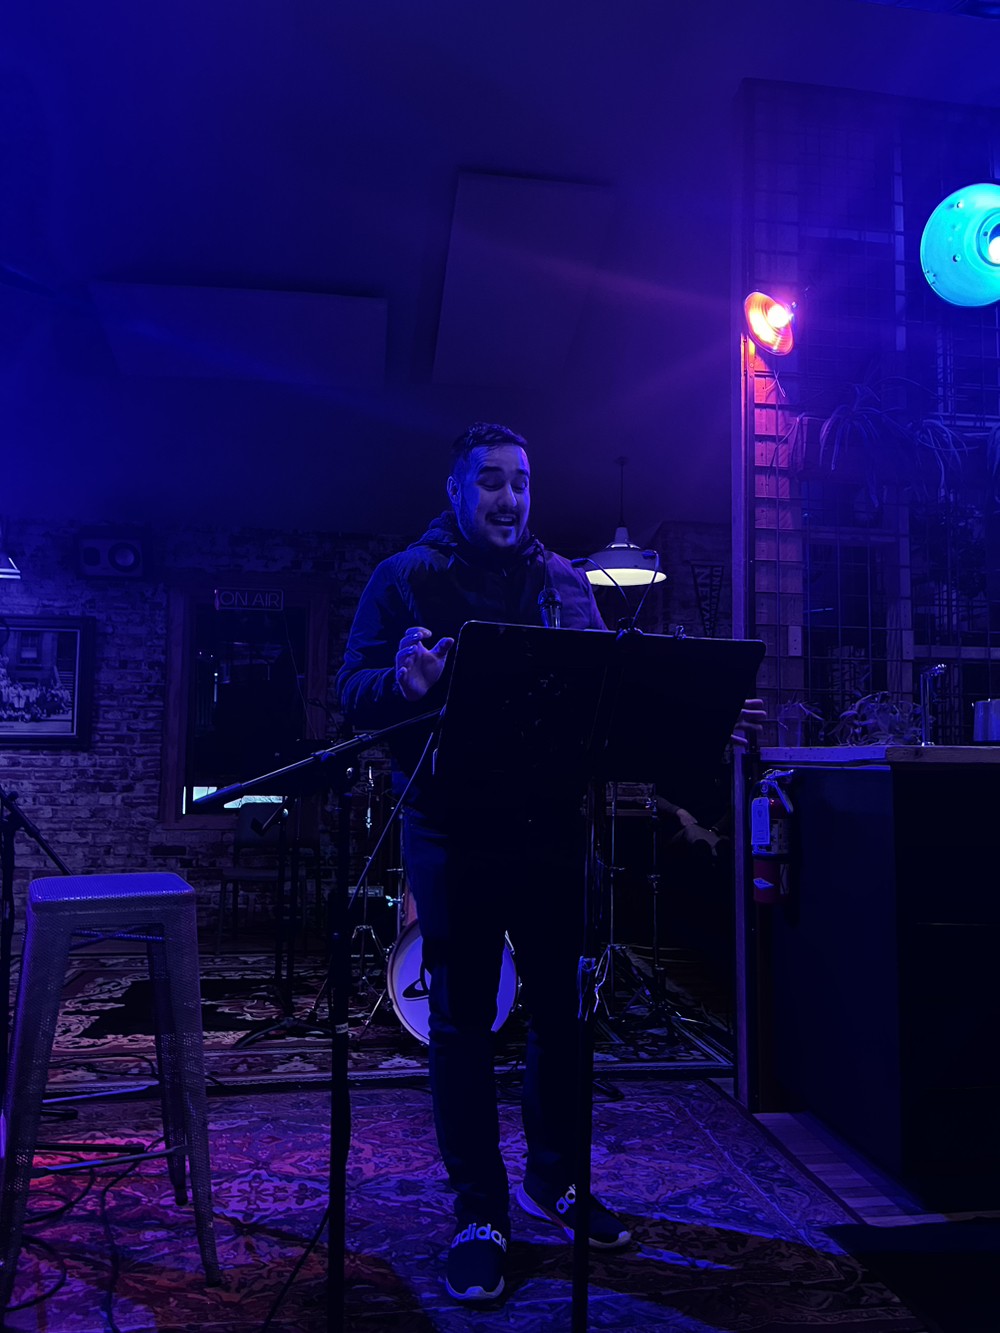 Image of Jamie onstage at poetry night